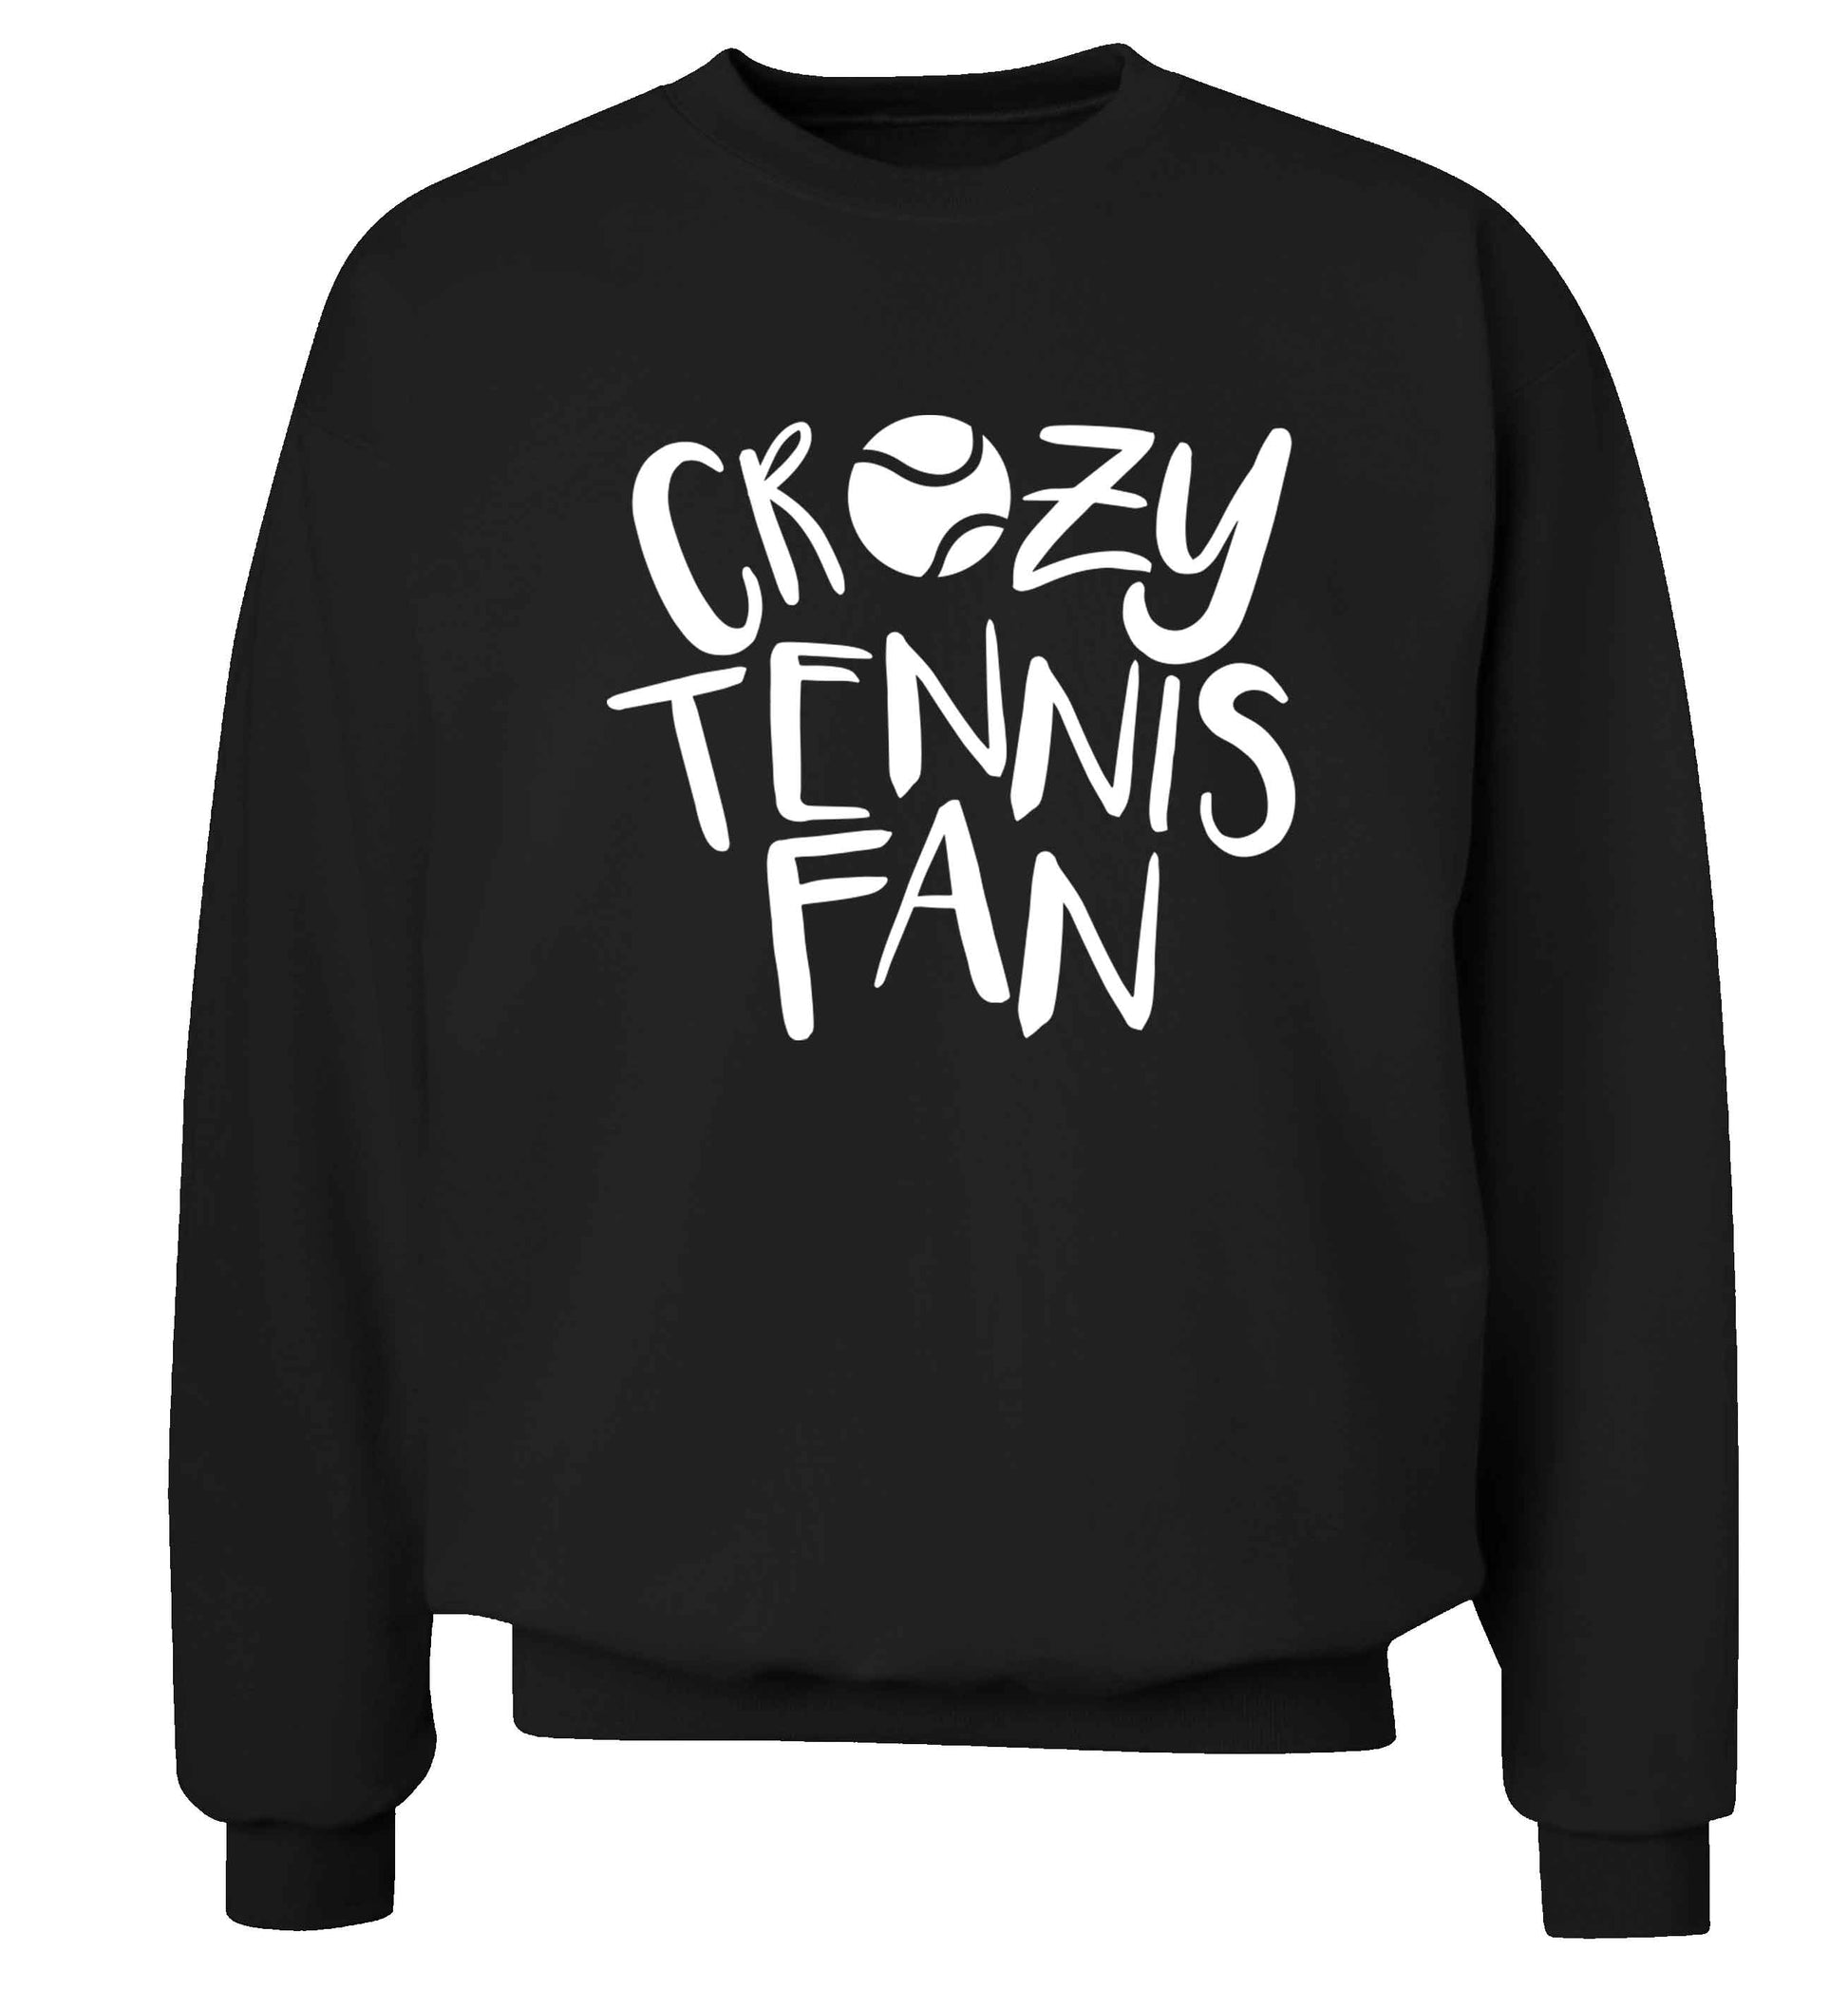 Crazy tennis fan Adult's unisex black Sweater 2XL